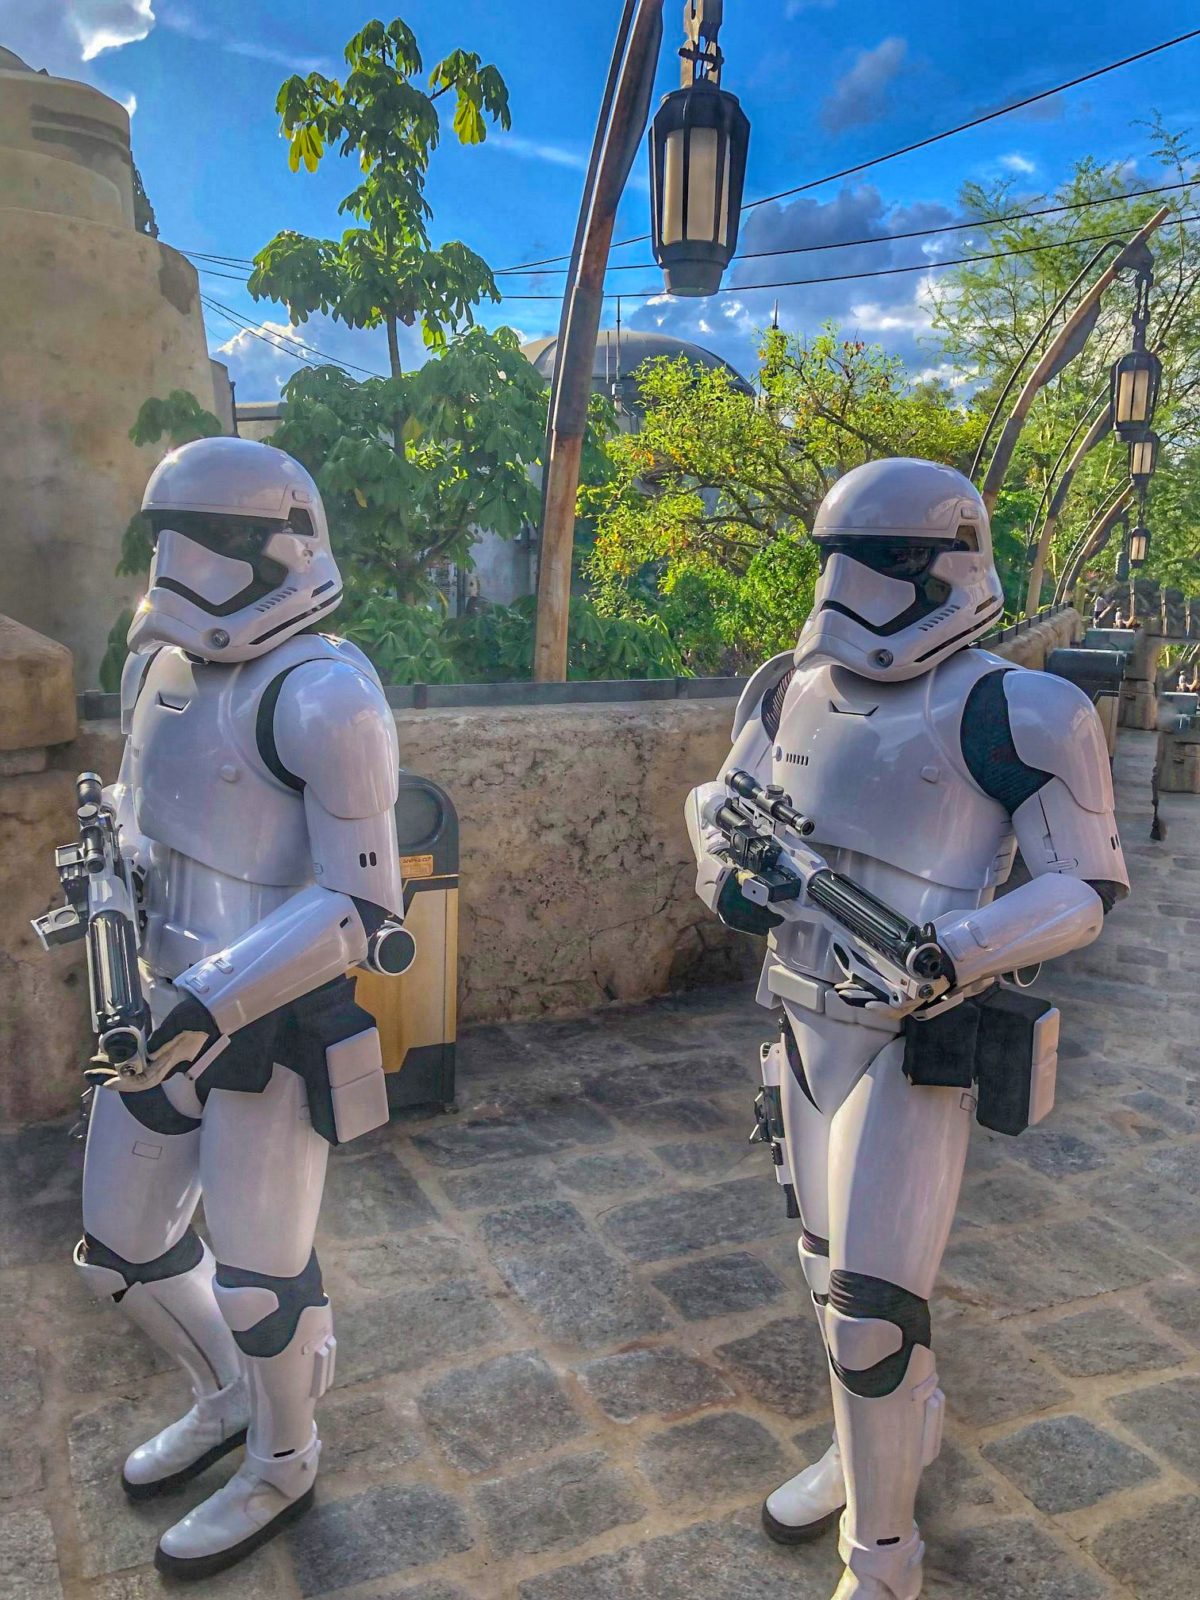 Disney's Galaxy's Edge stormtroopers